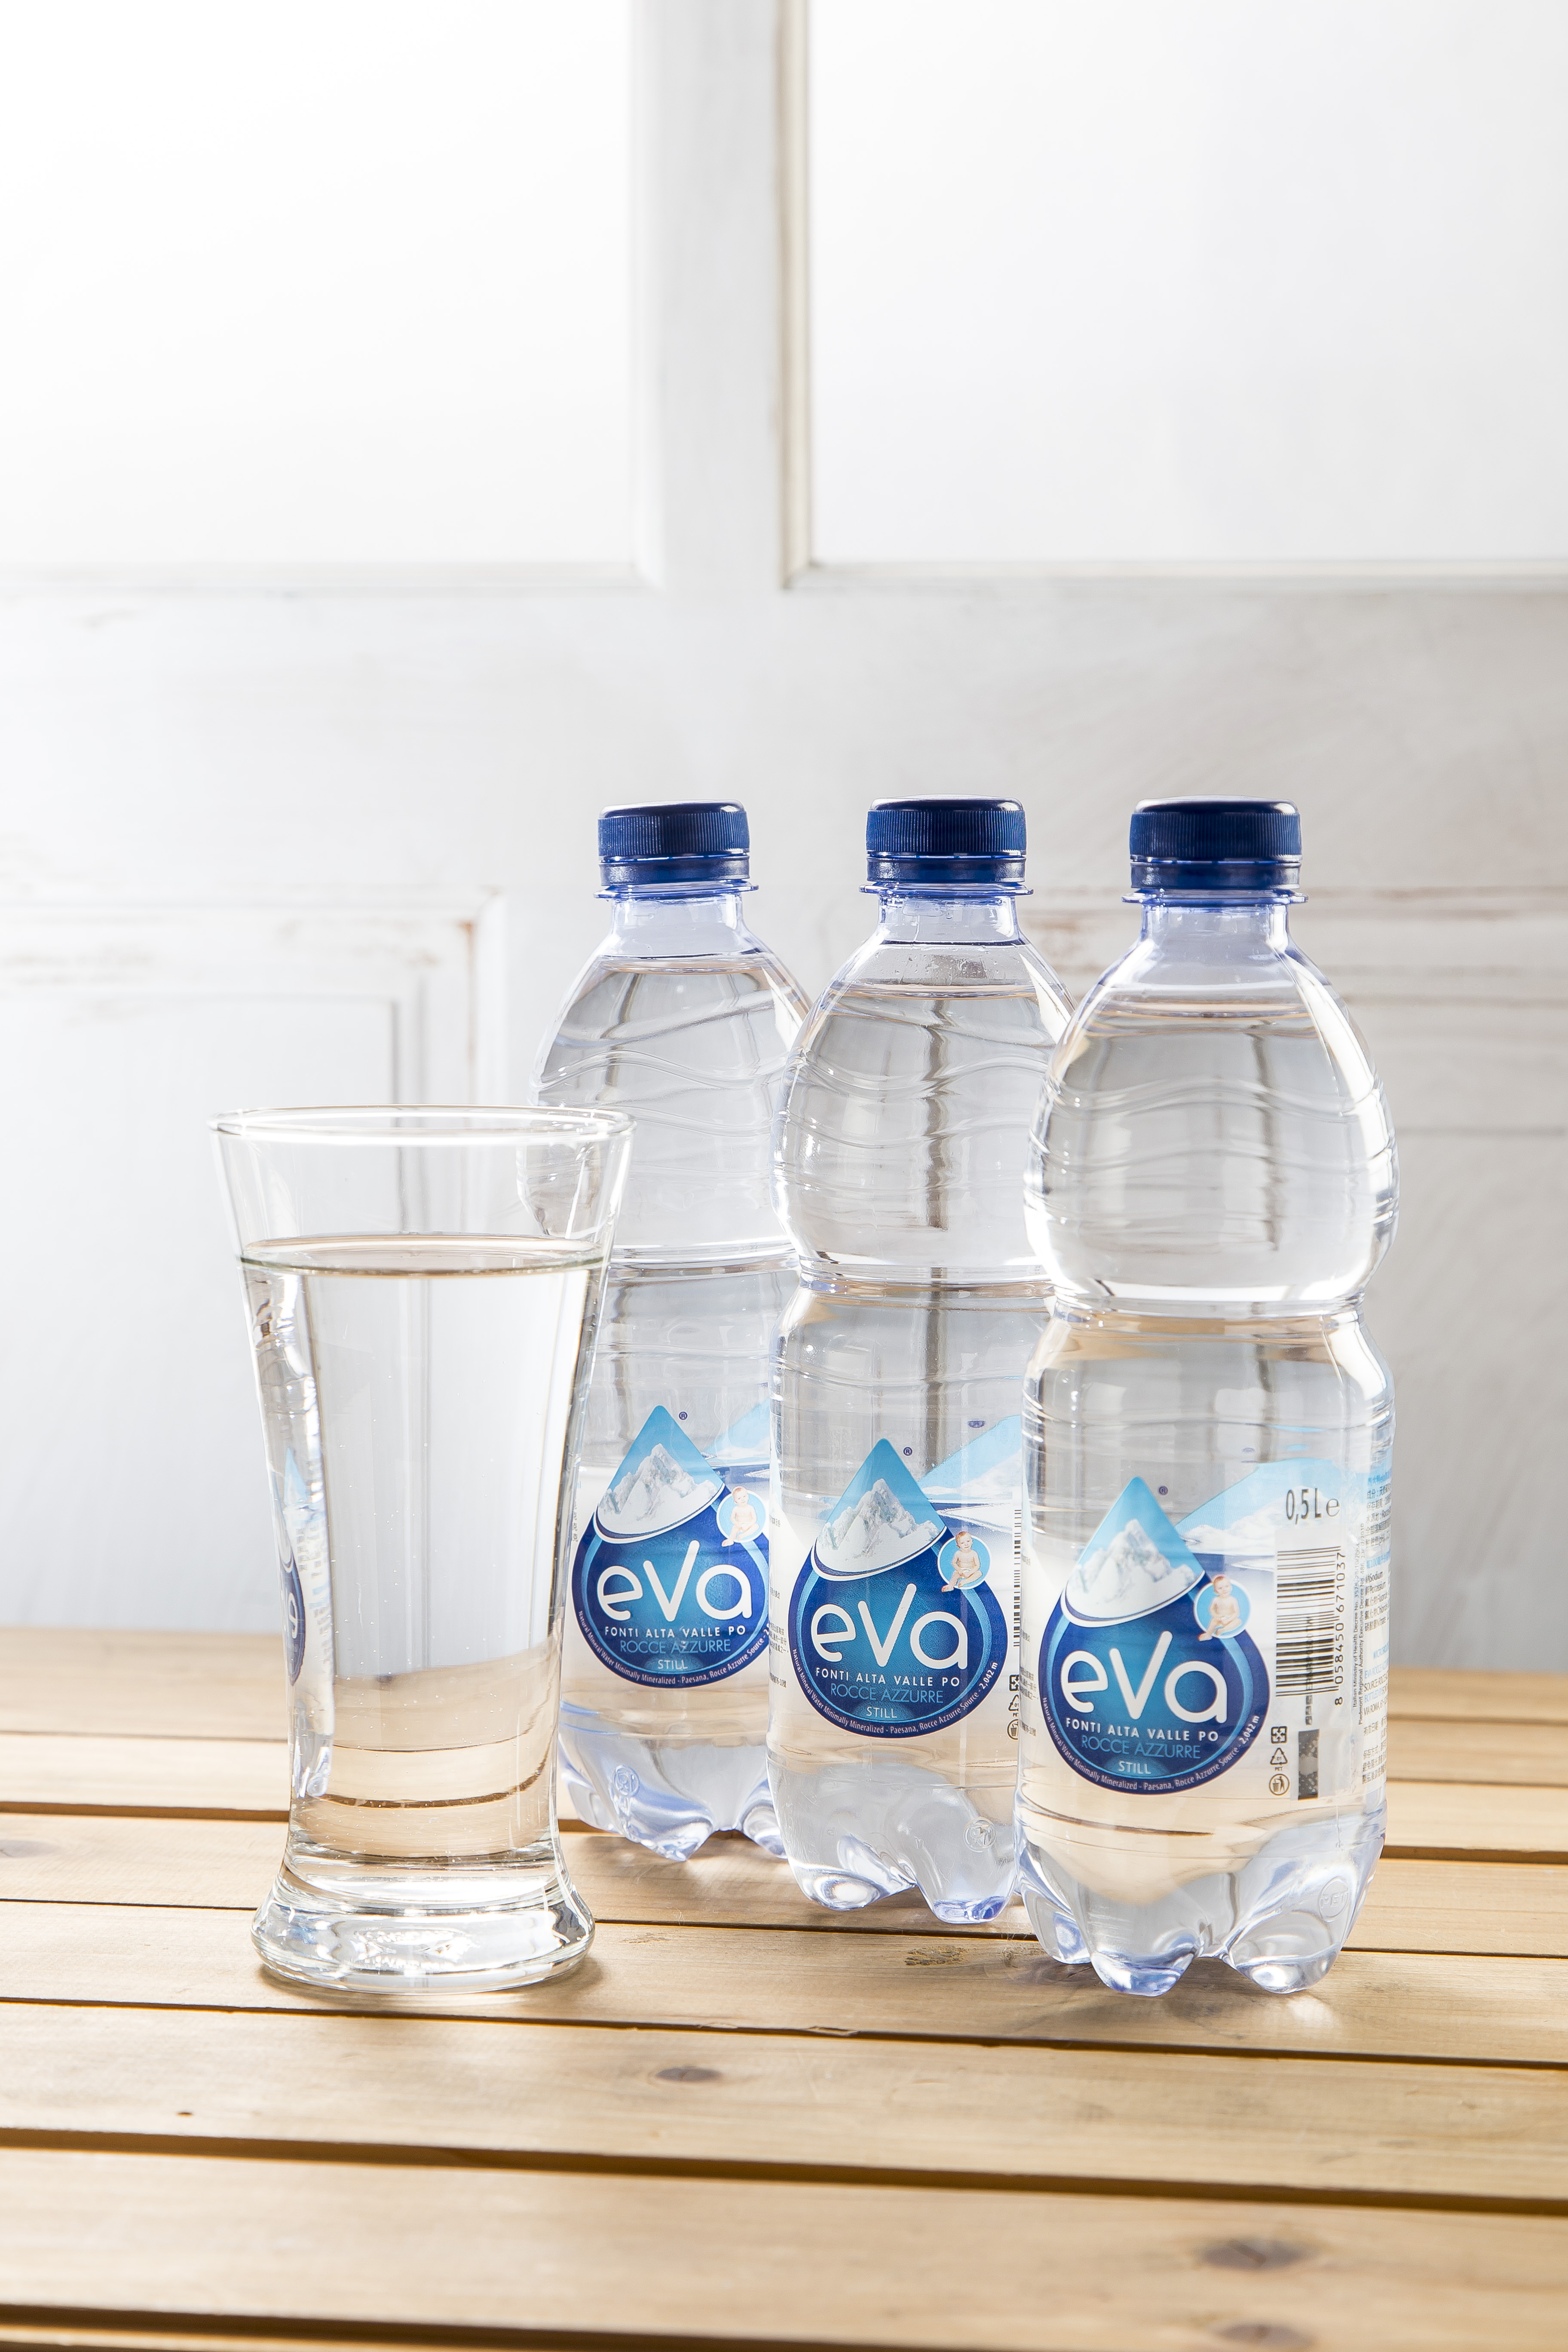 【eva】高峰天然礦泉水 瓶裝水/飲用水/水 (500ml/1500ml)